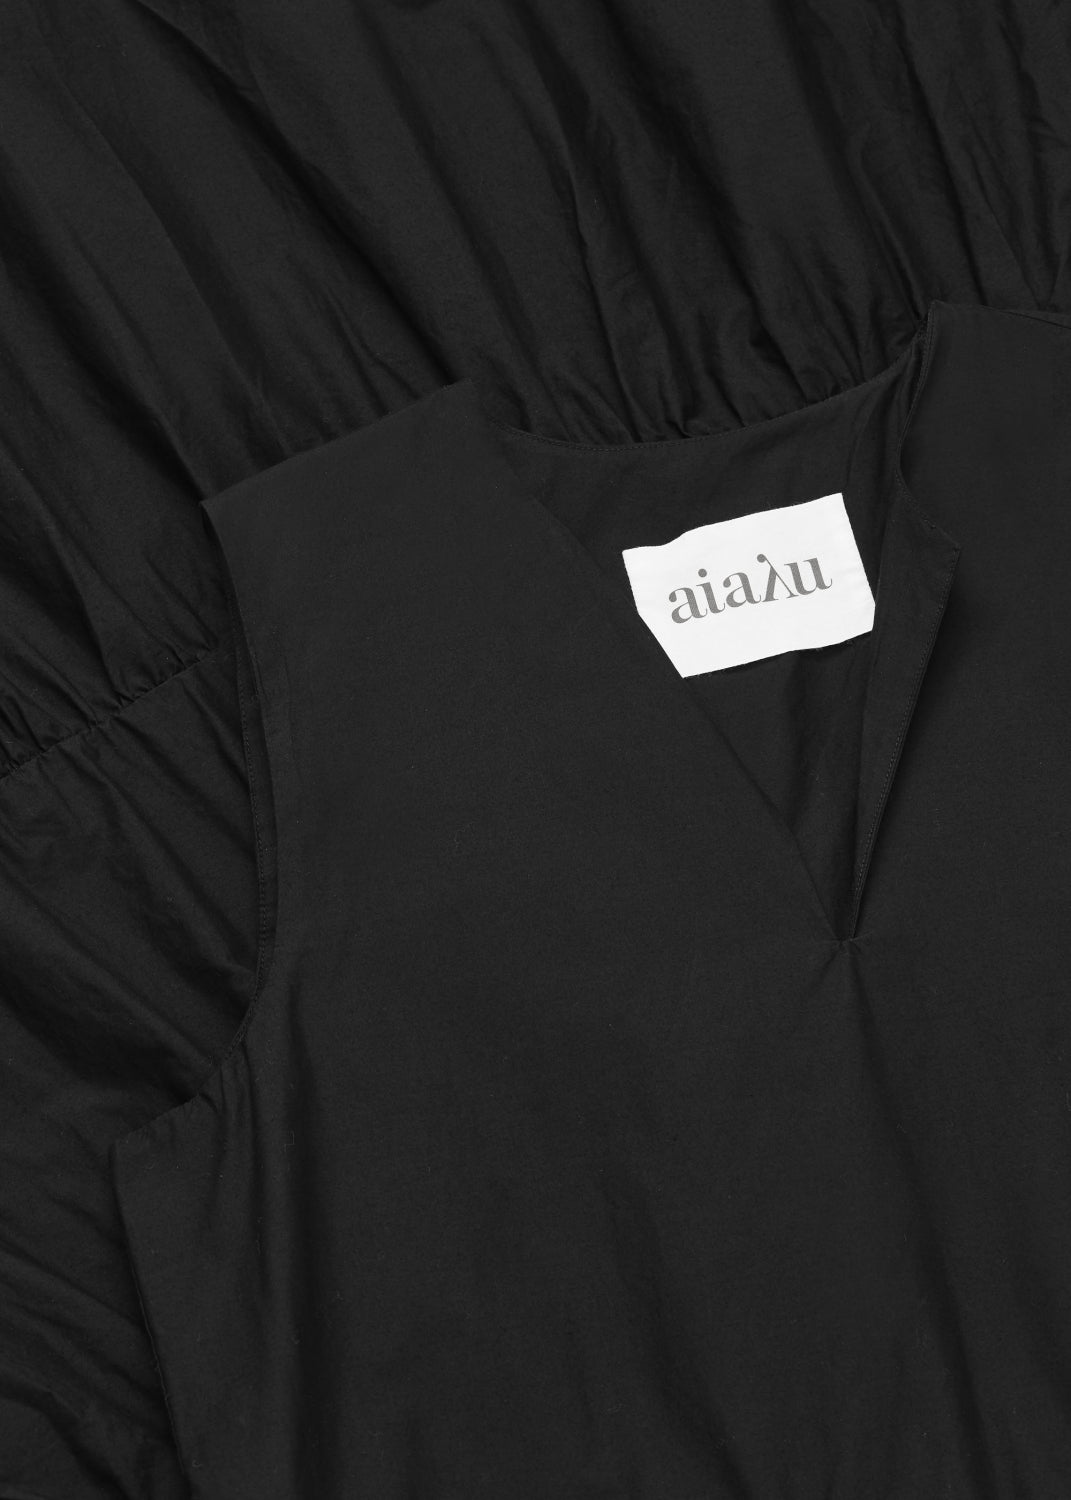 Aiayu "Berta Dress" Black